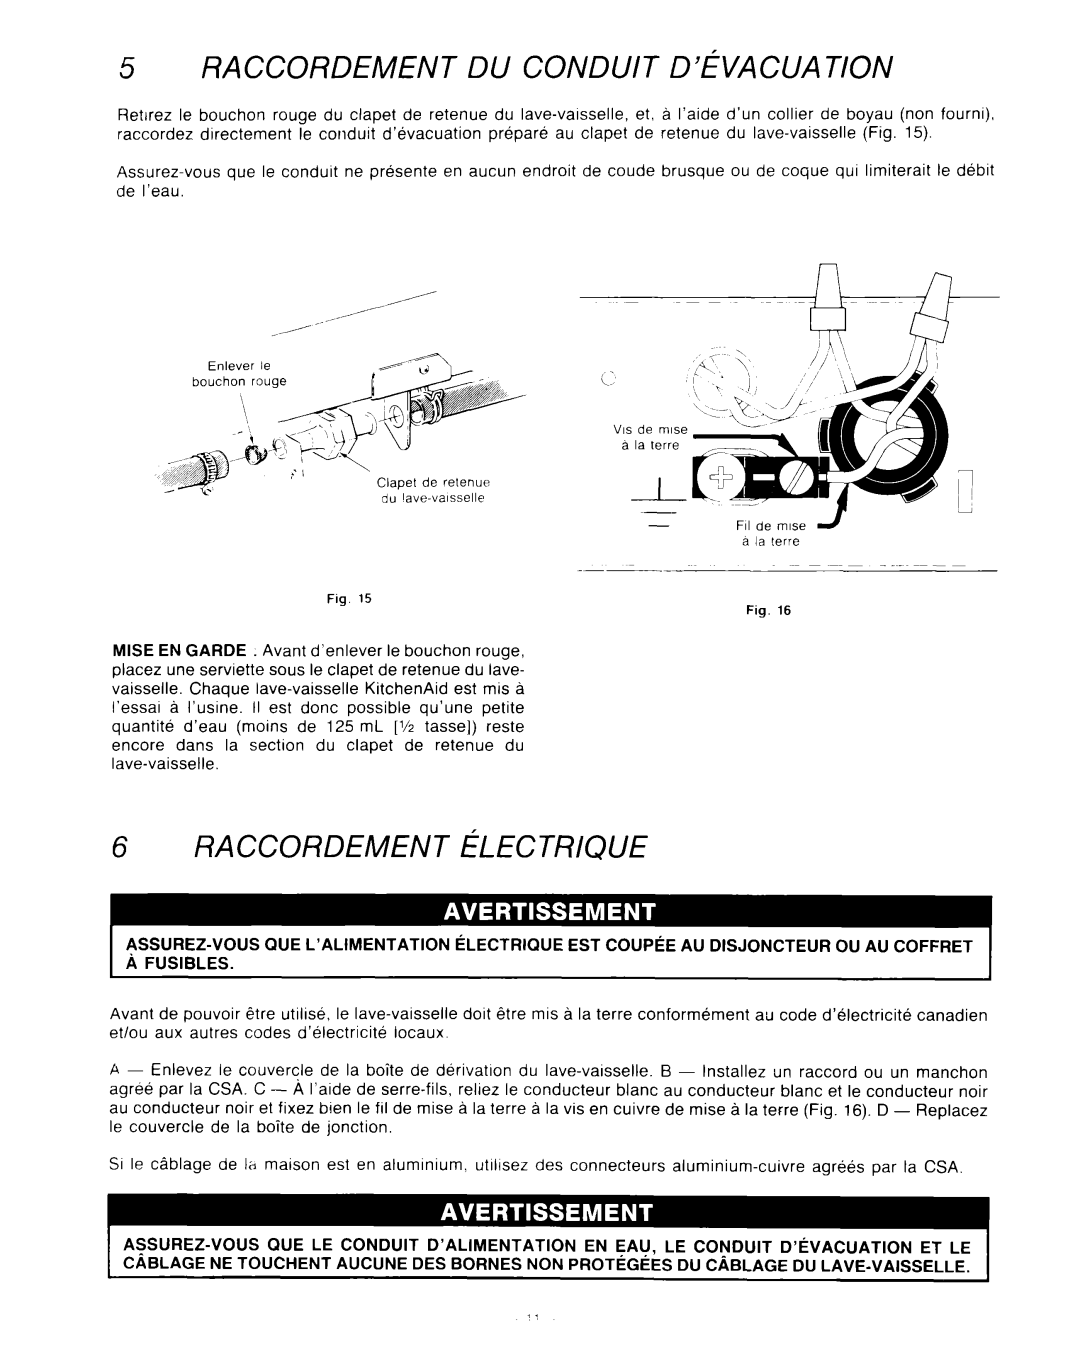 KitchenAid KUD-22 manual RACCORDEMENT DU CONDUIT D’&ACUATlON, Raccordement Glectrique 